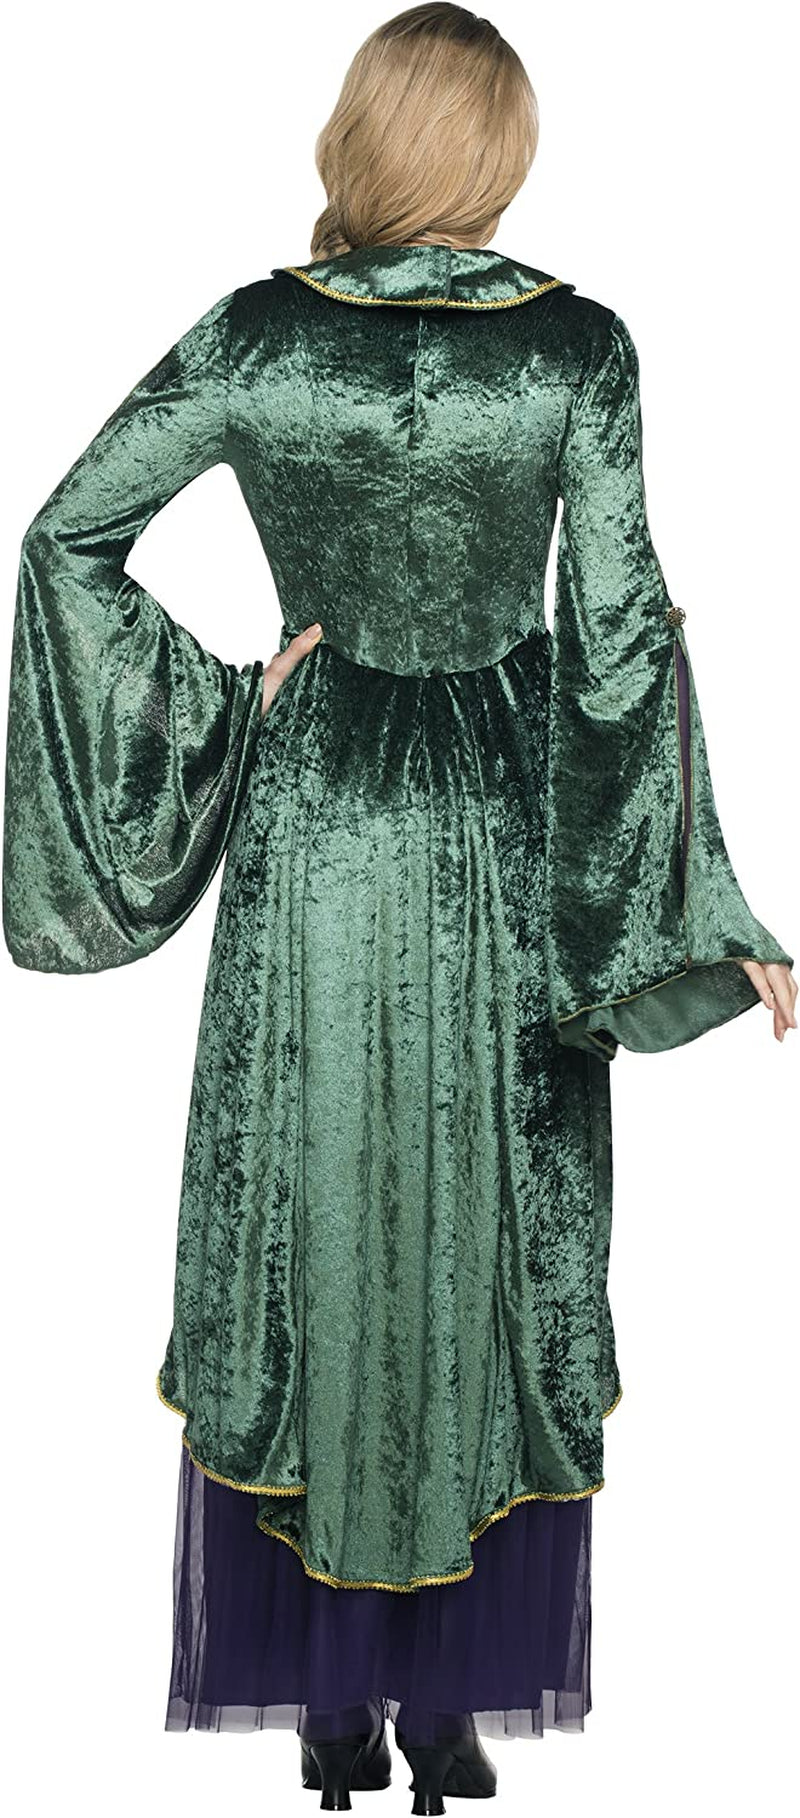 Spirit Halloween Adult Winifred Sanderson Hocus Pocus Costume | OFFICIALLY LICENSED